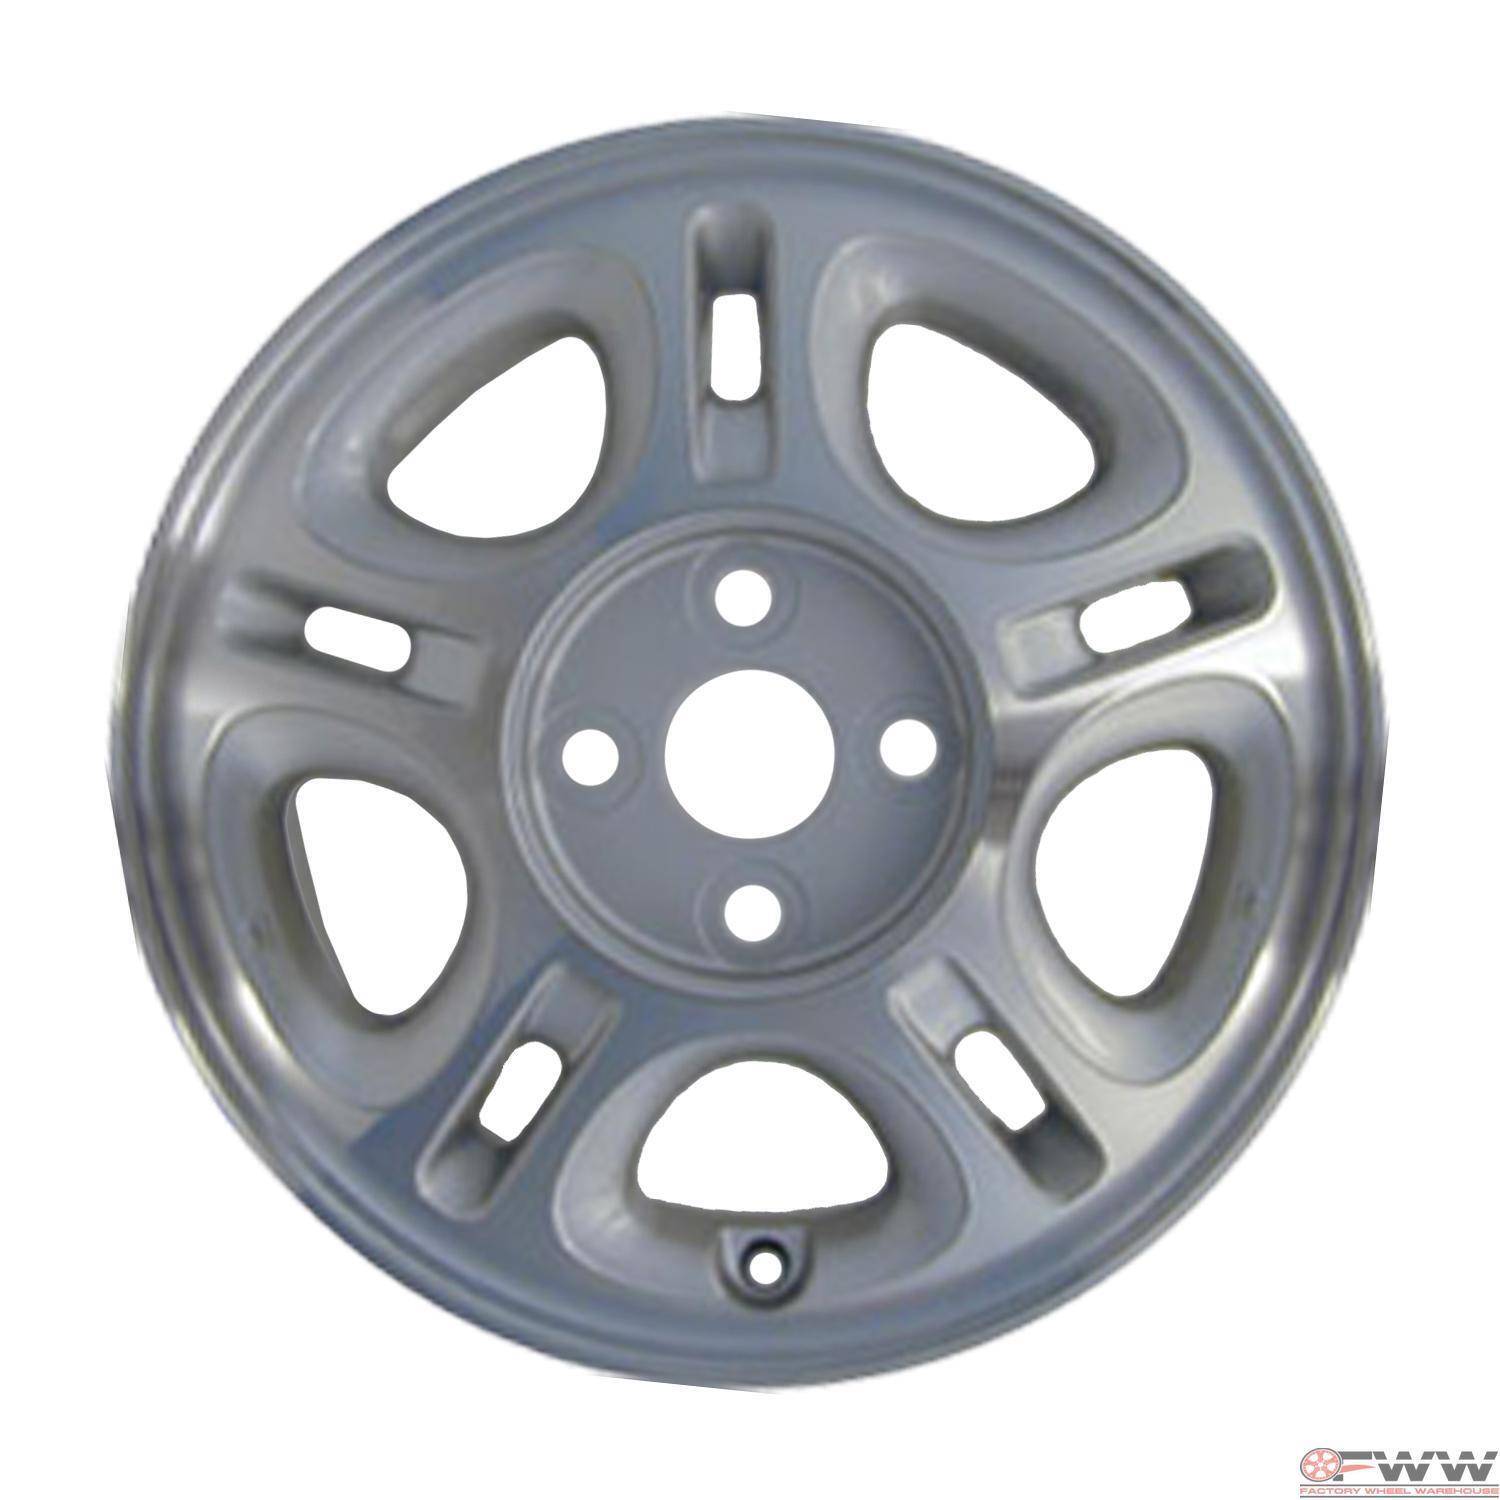 Geo Chevrolet Prizm Wheel 1998-2002 14